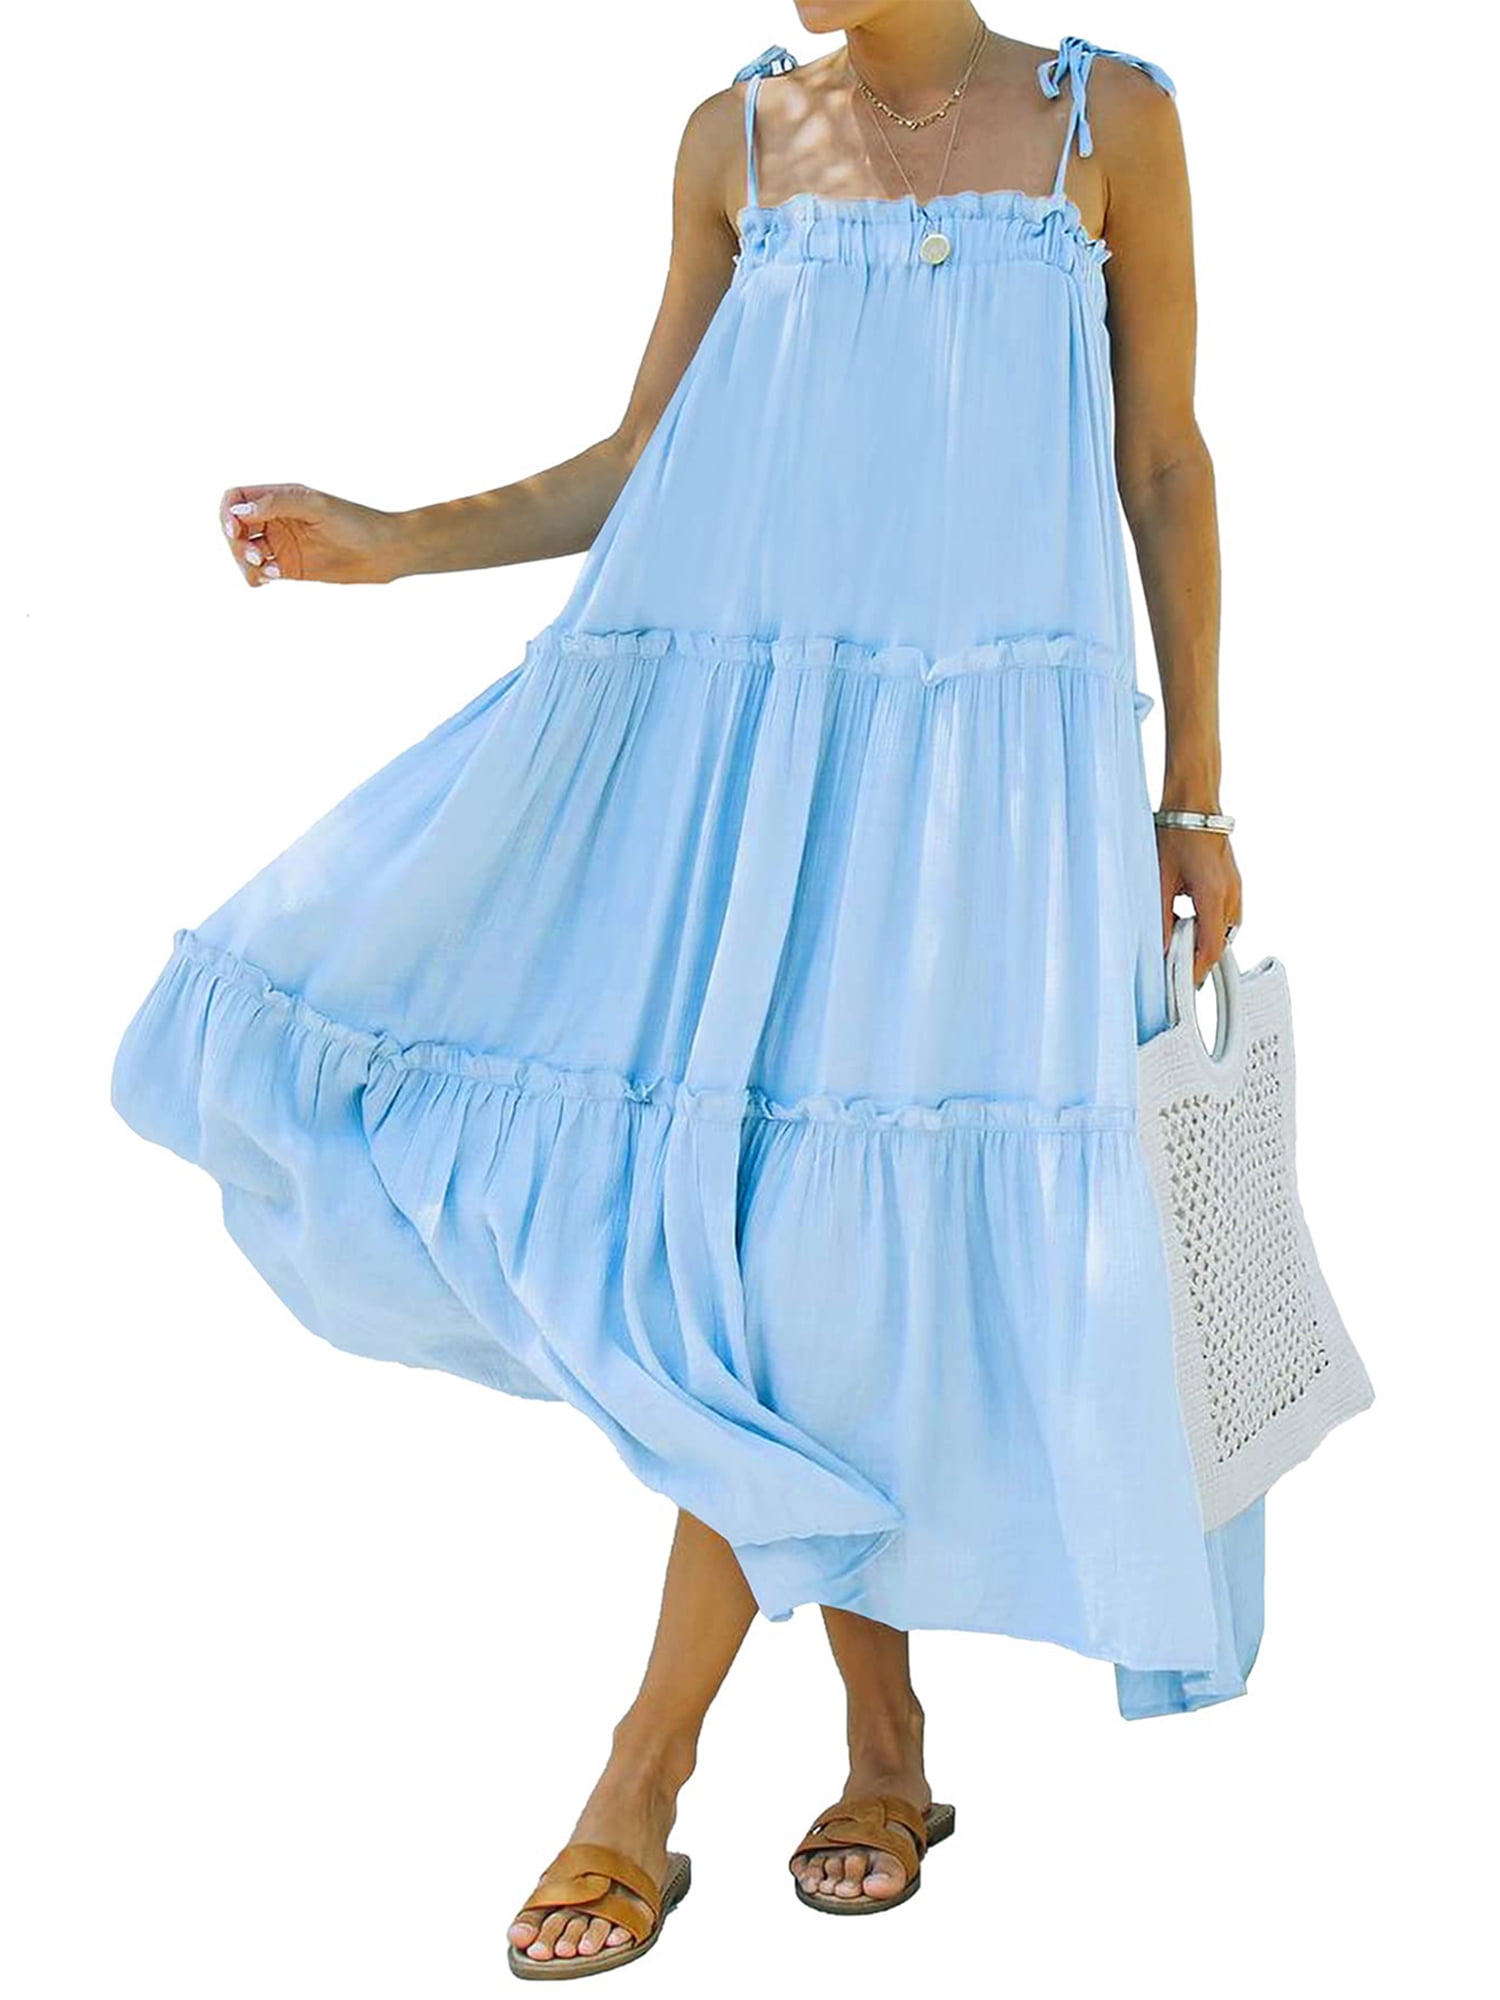 Multitrust Slip Long Loose Dresses for Women Summer, Solid Color